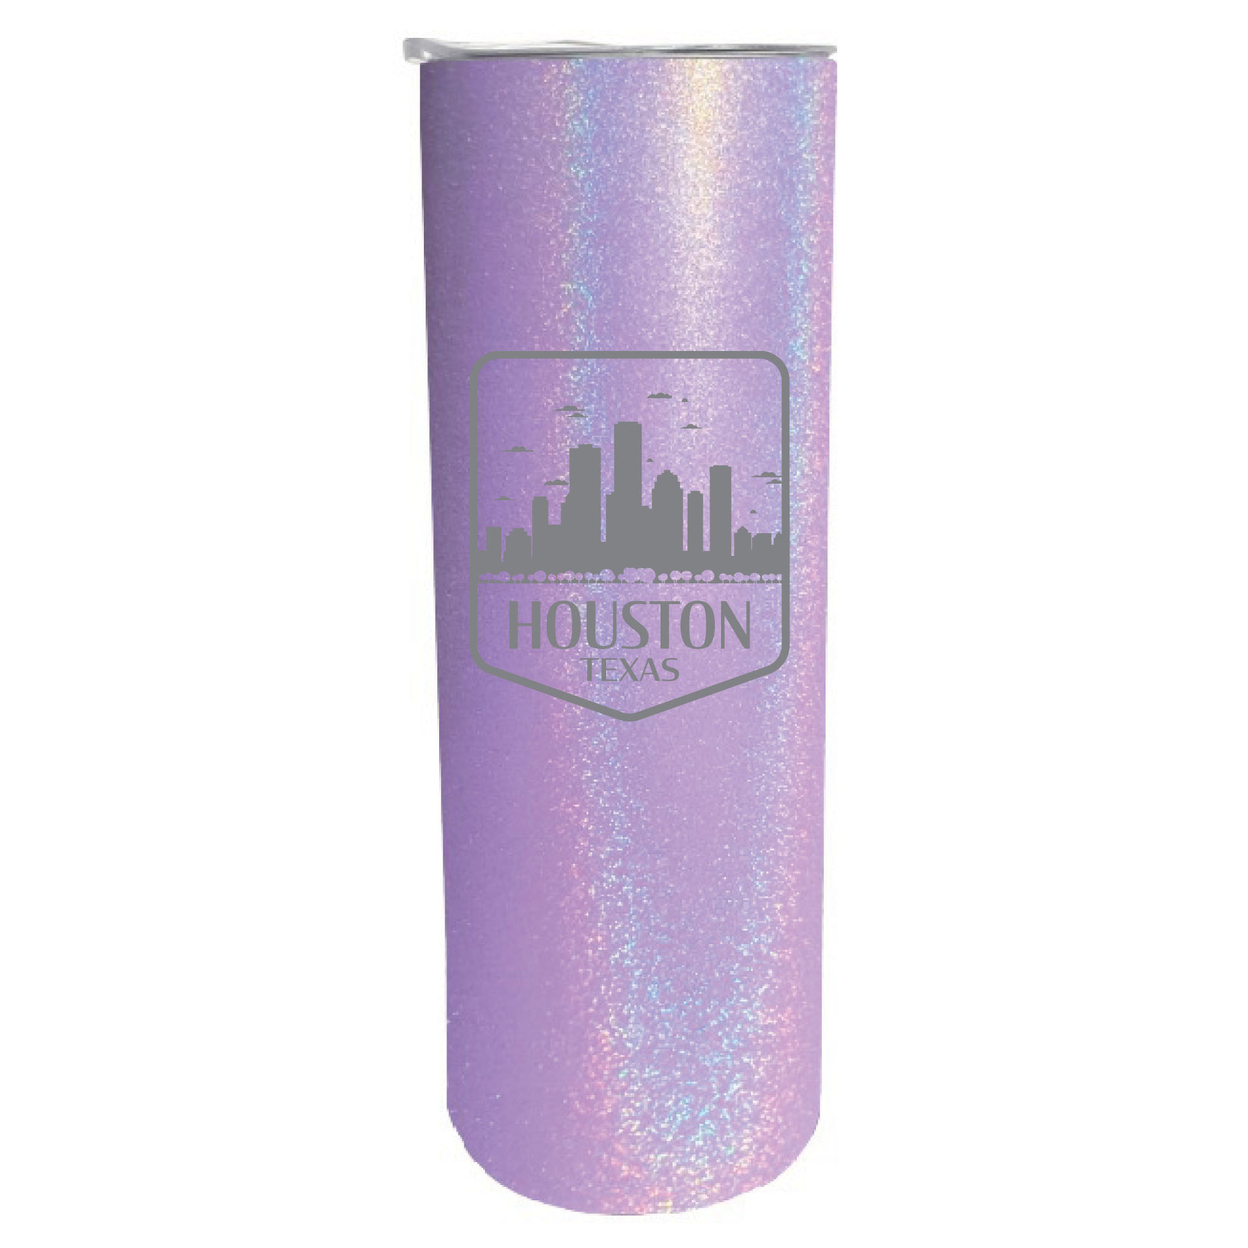 Houston Texas Souvenir 20 Oz Engraved Insulated Stainless Steel Skinny Tumbler - Purple Glitter,,4-Pack